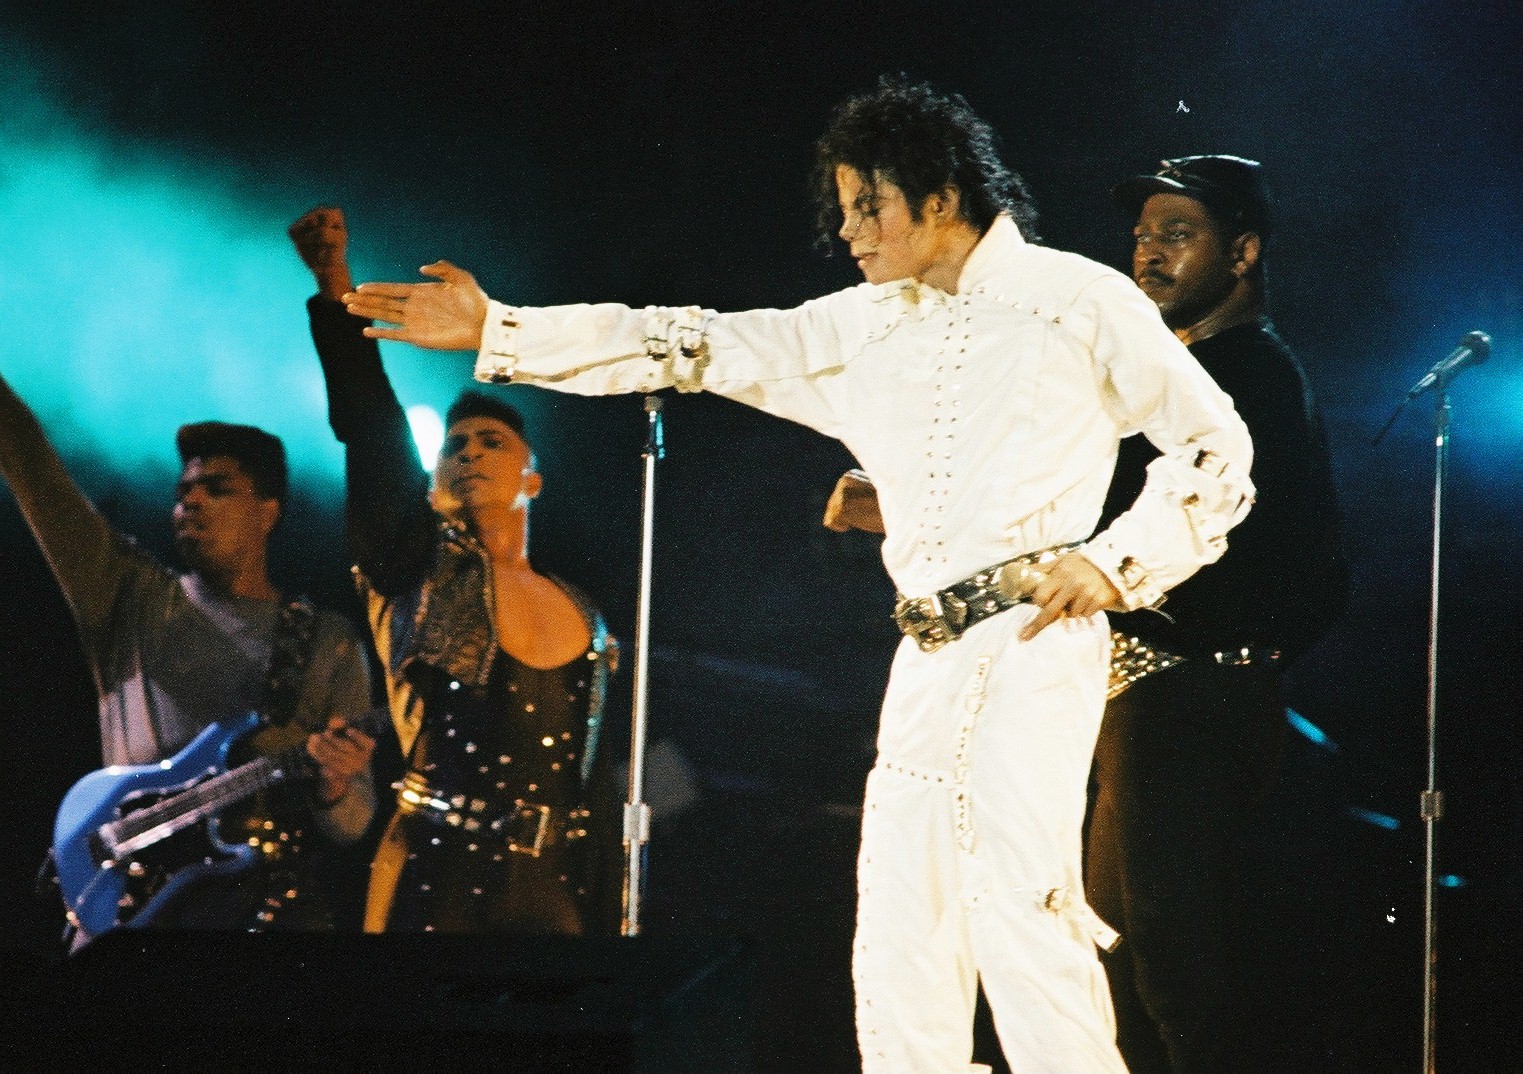 Michael jackson live. Michael Jackson wanna be Startin Somethin 1997. Michael Jackson Argentina 1993. Michael Jackson wanna be Startin Somethin Bad Tour.